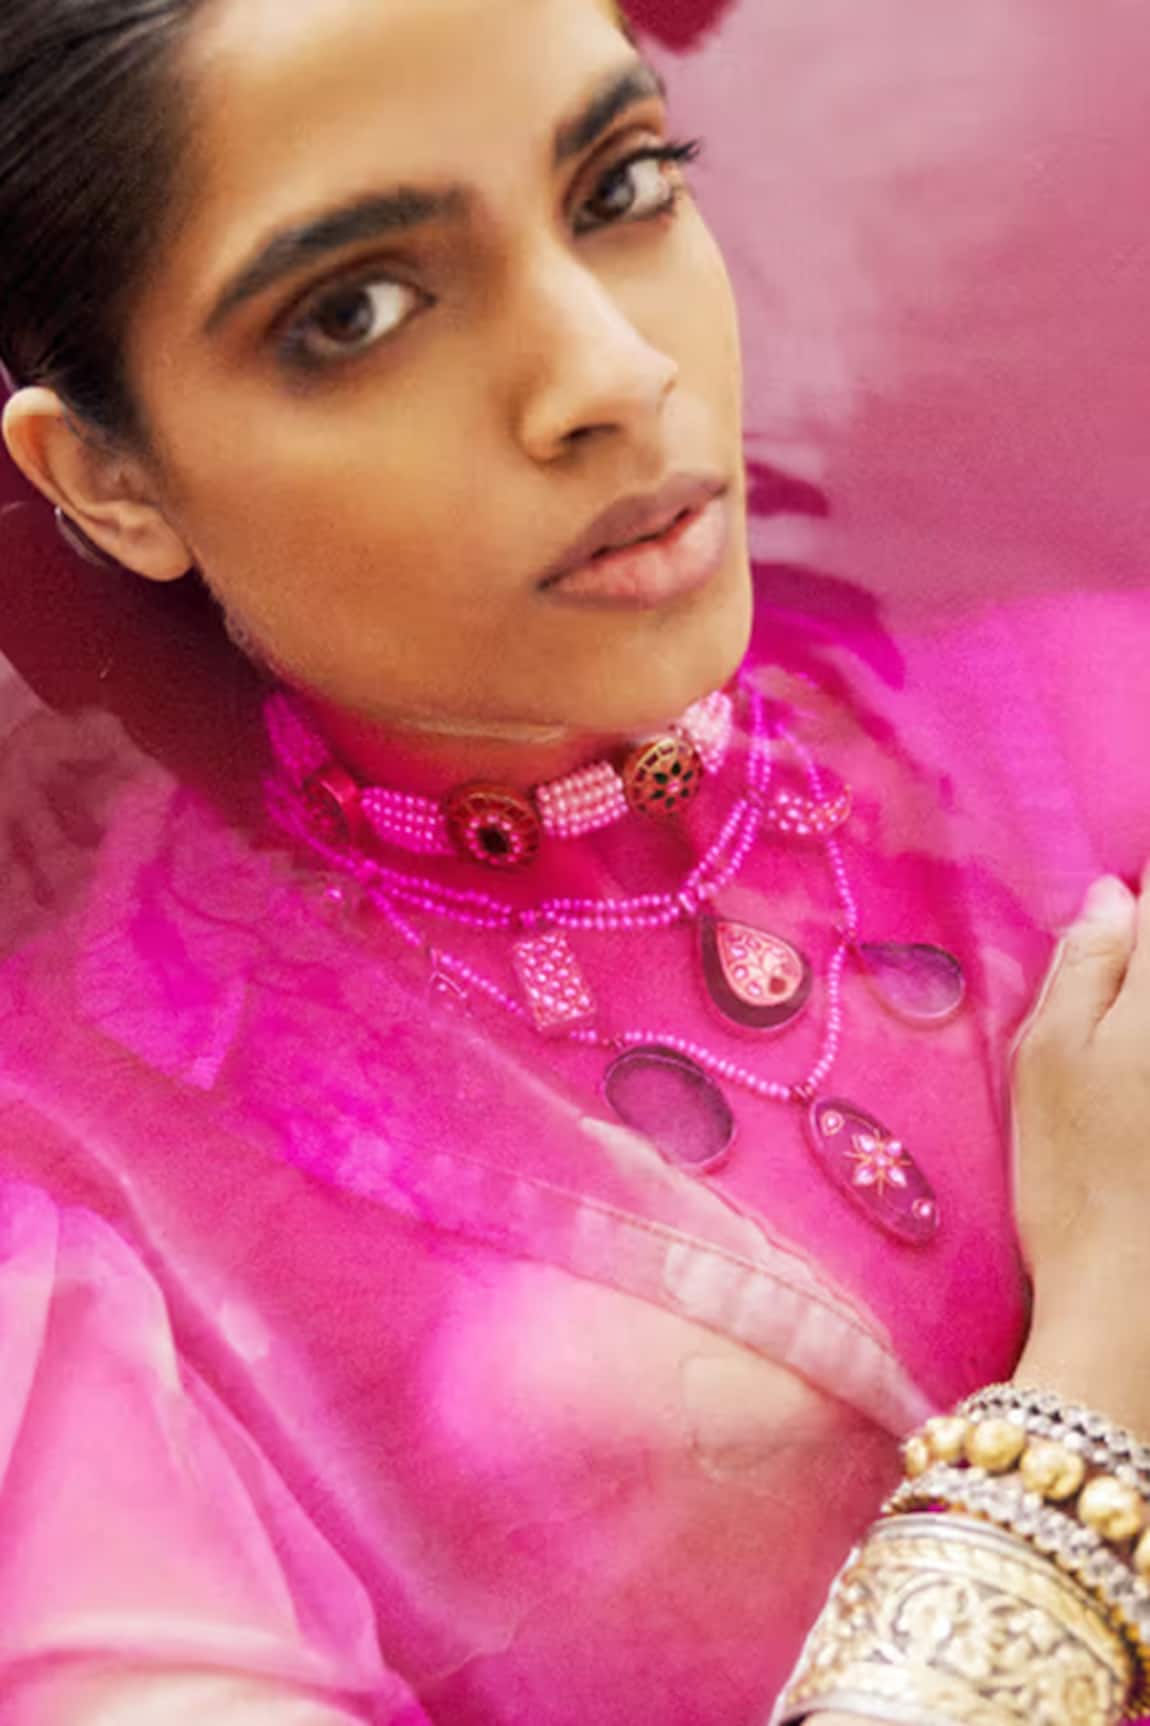 Sangeeta Boochra X Payal Singhal Nagma Kundan Embellished Pendant Necklace